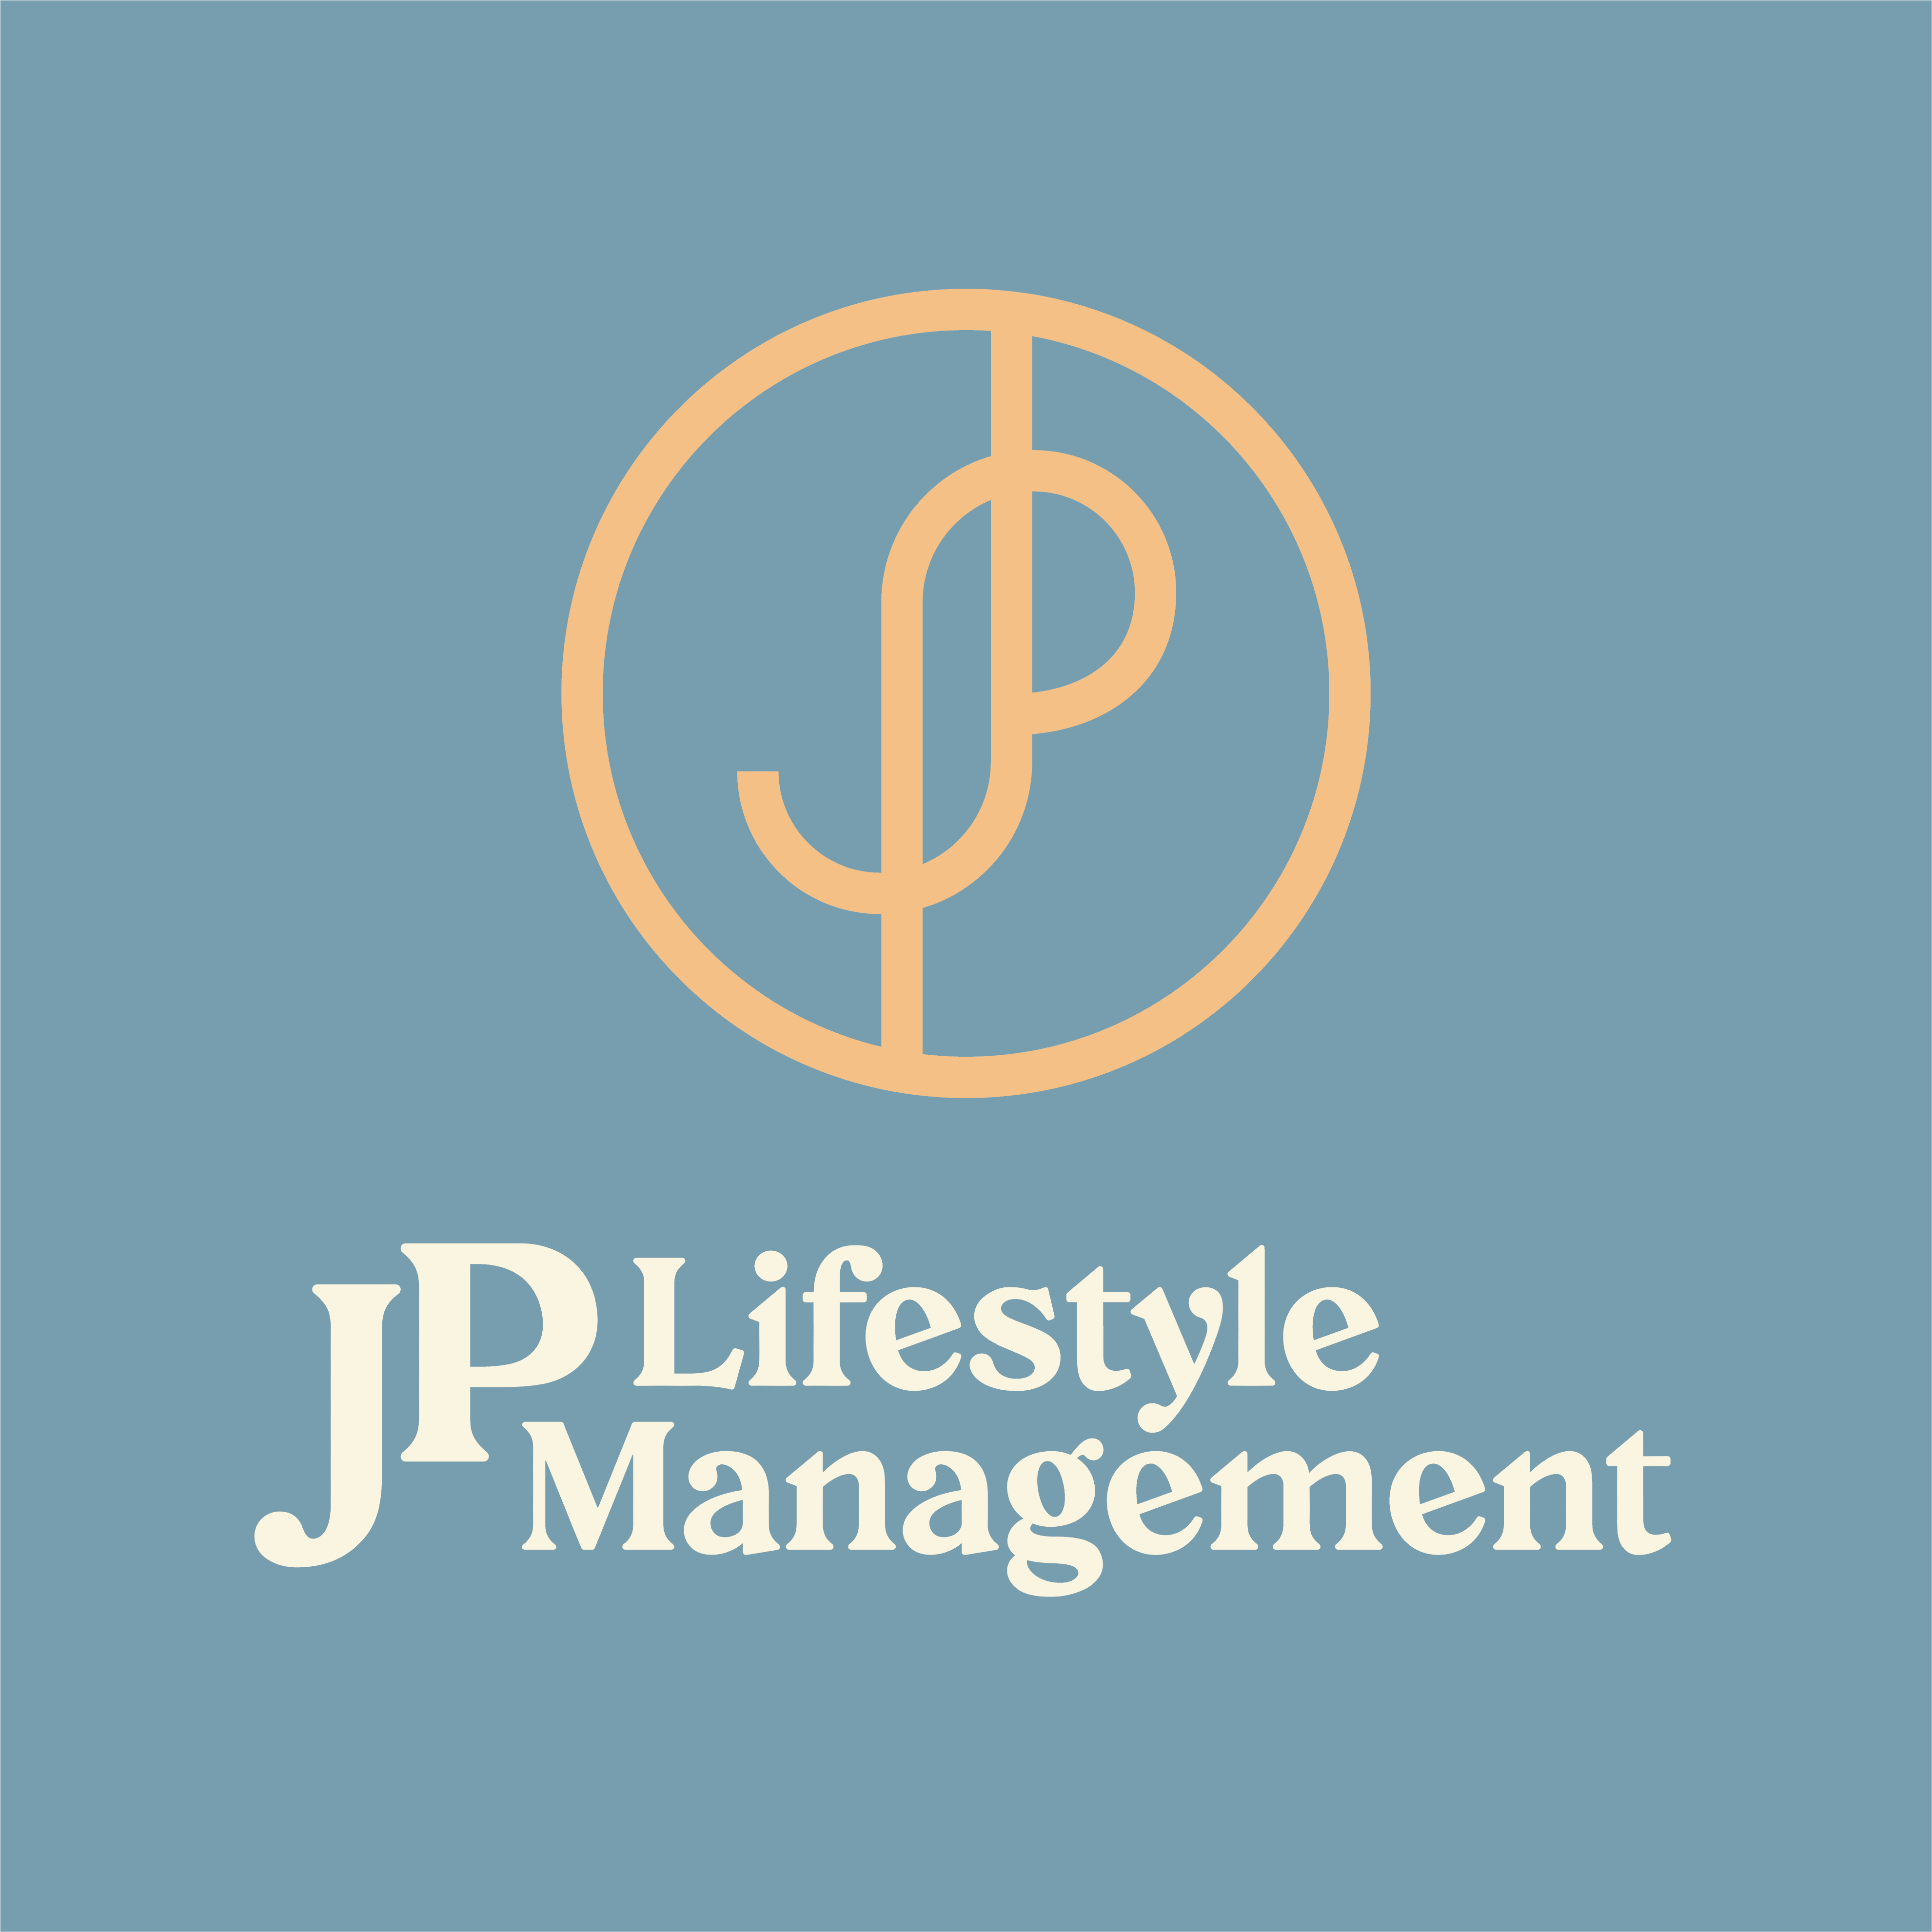 JP Lifestyle Management Logo